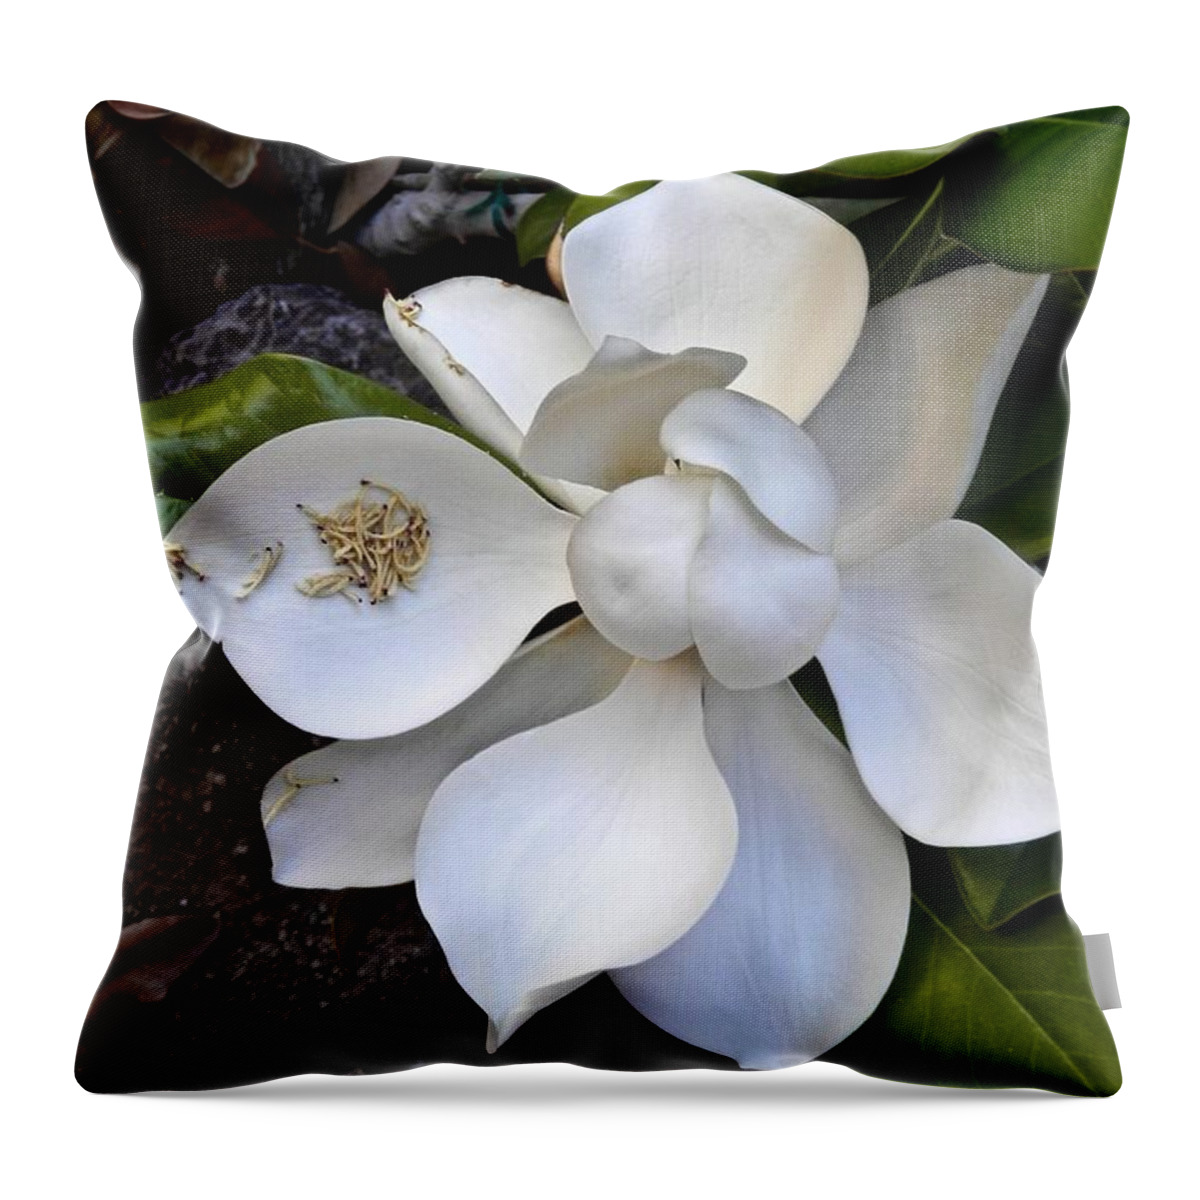 Magnolia Throw Pillow featuring the photograph Magnolia by Barbara Zahno